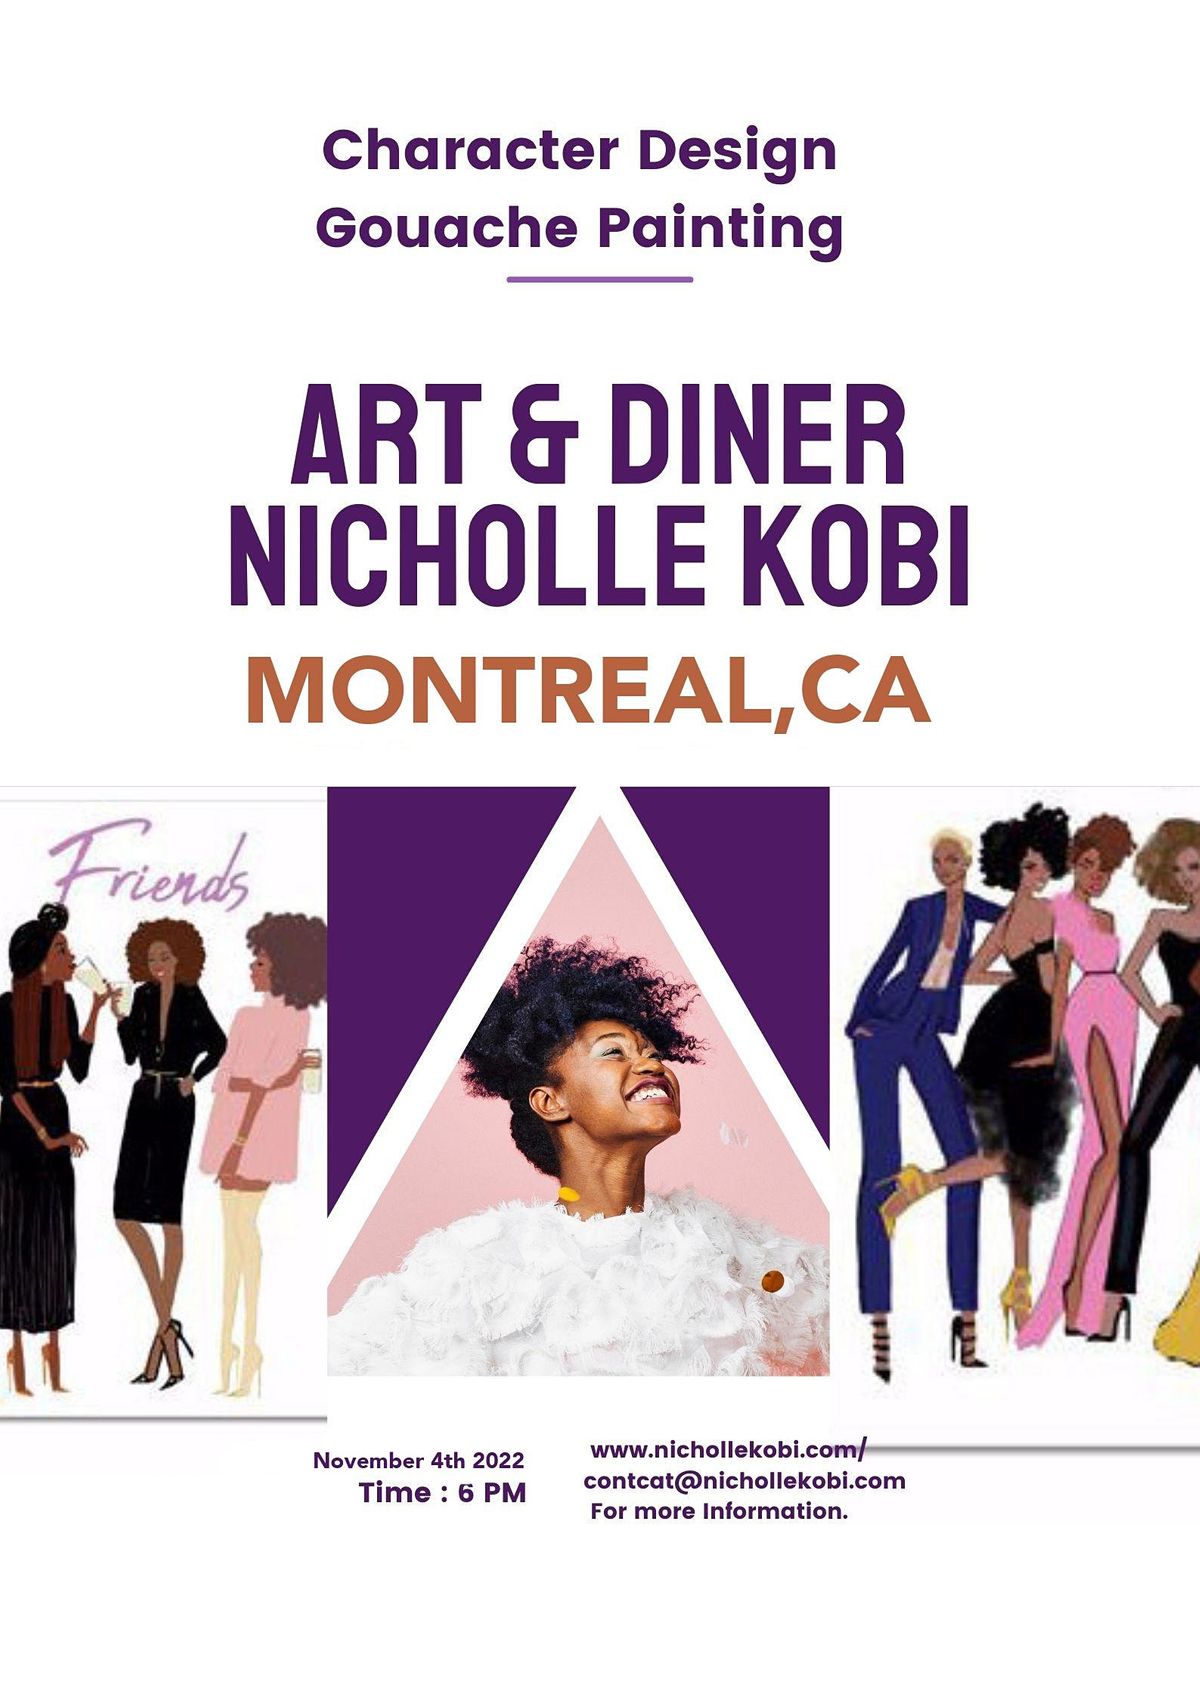 Art & Dinner with Nicholle Kobi